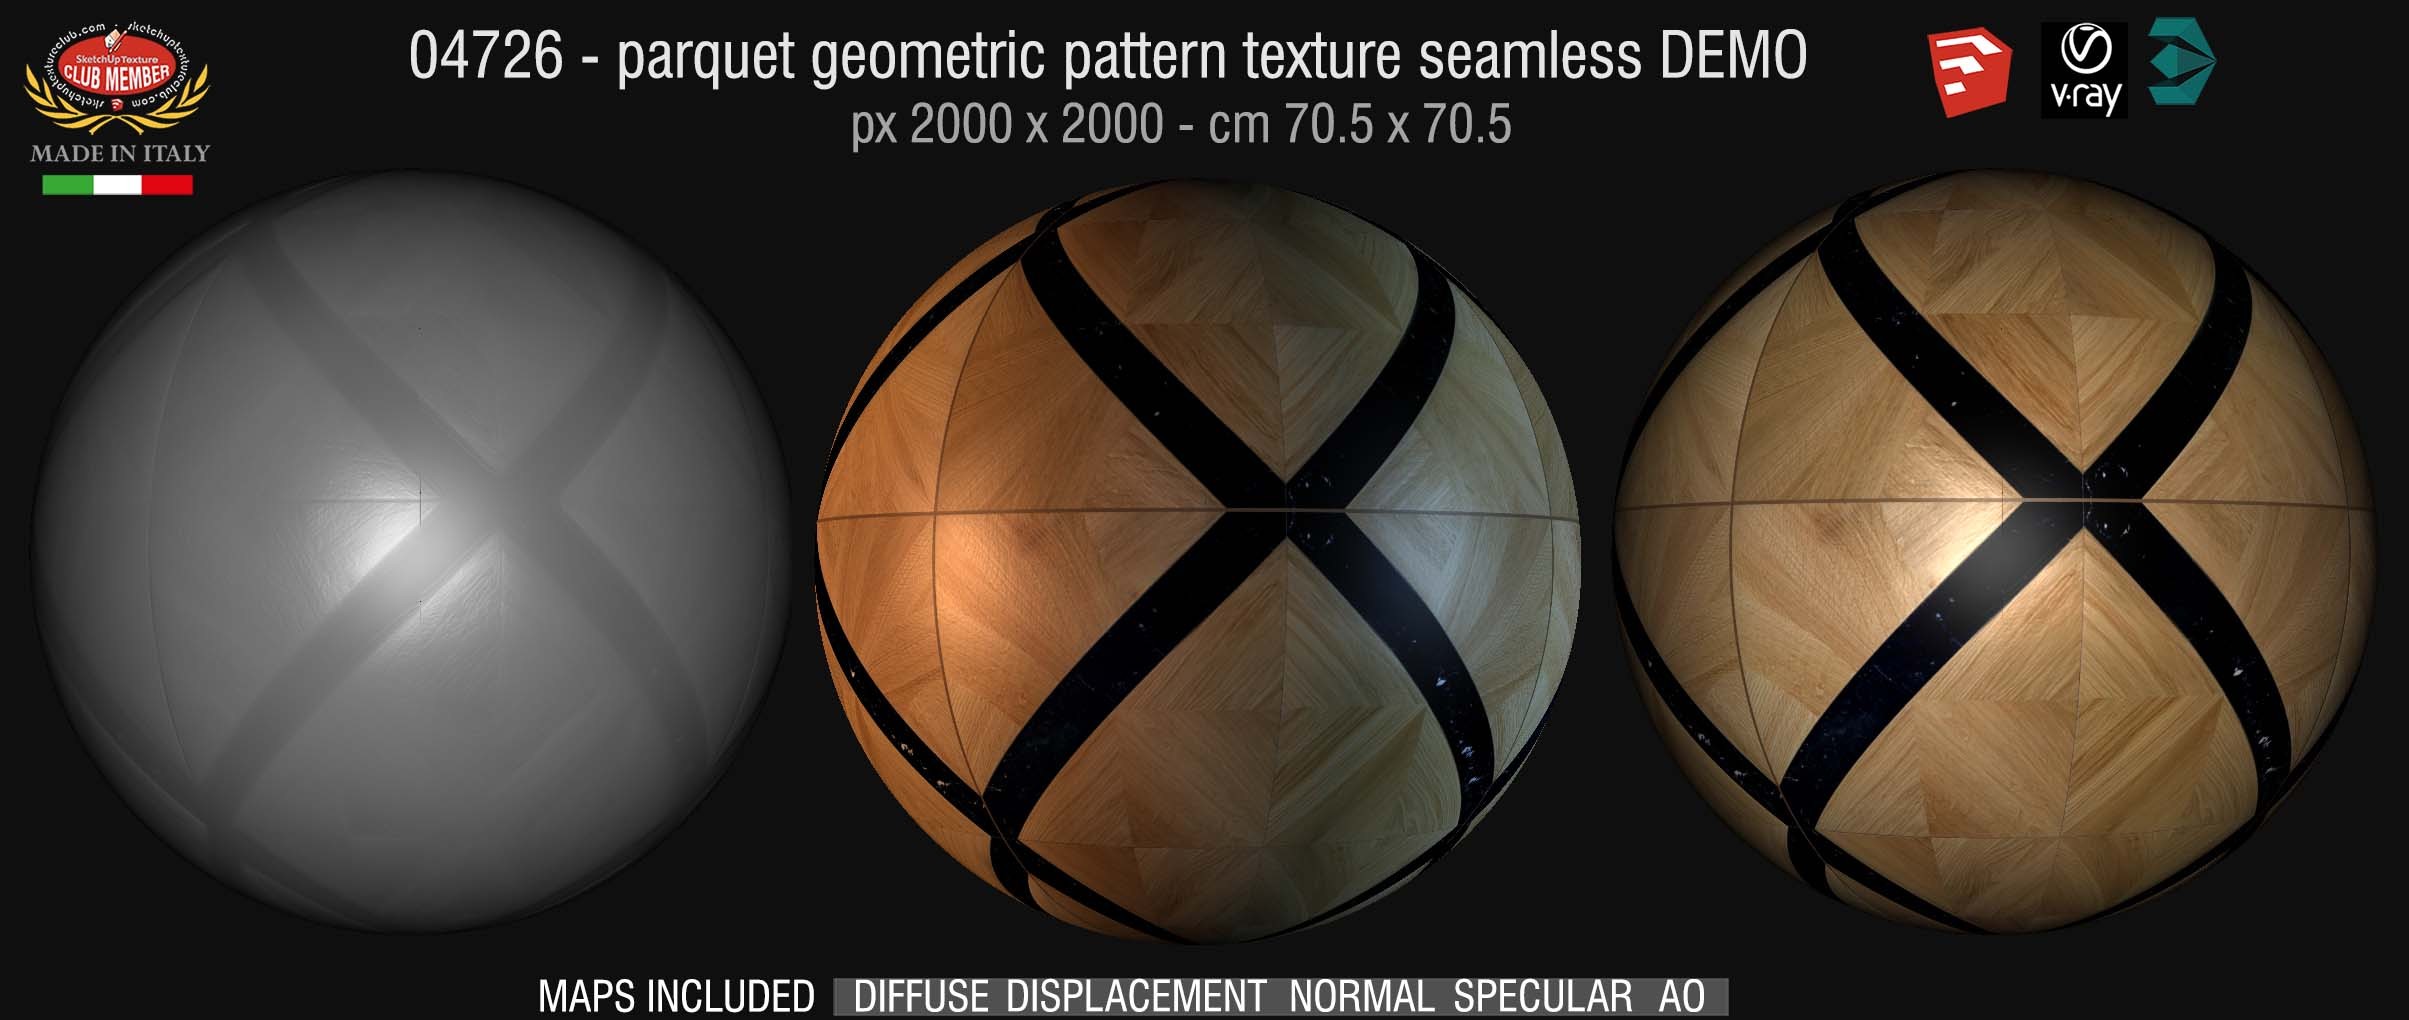 04726 HR Parquet geometric pattern texture seamless + maps DEMO